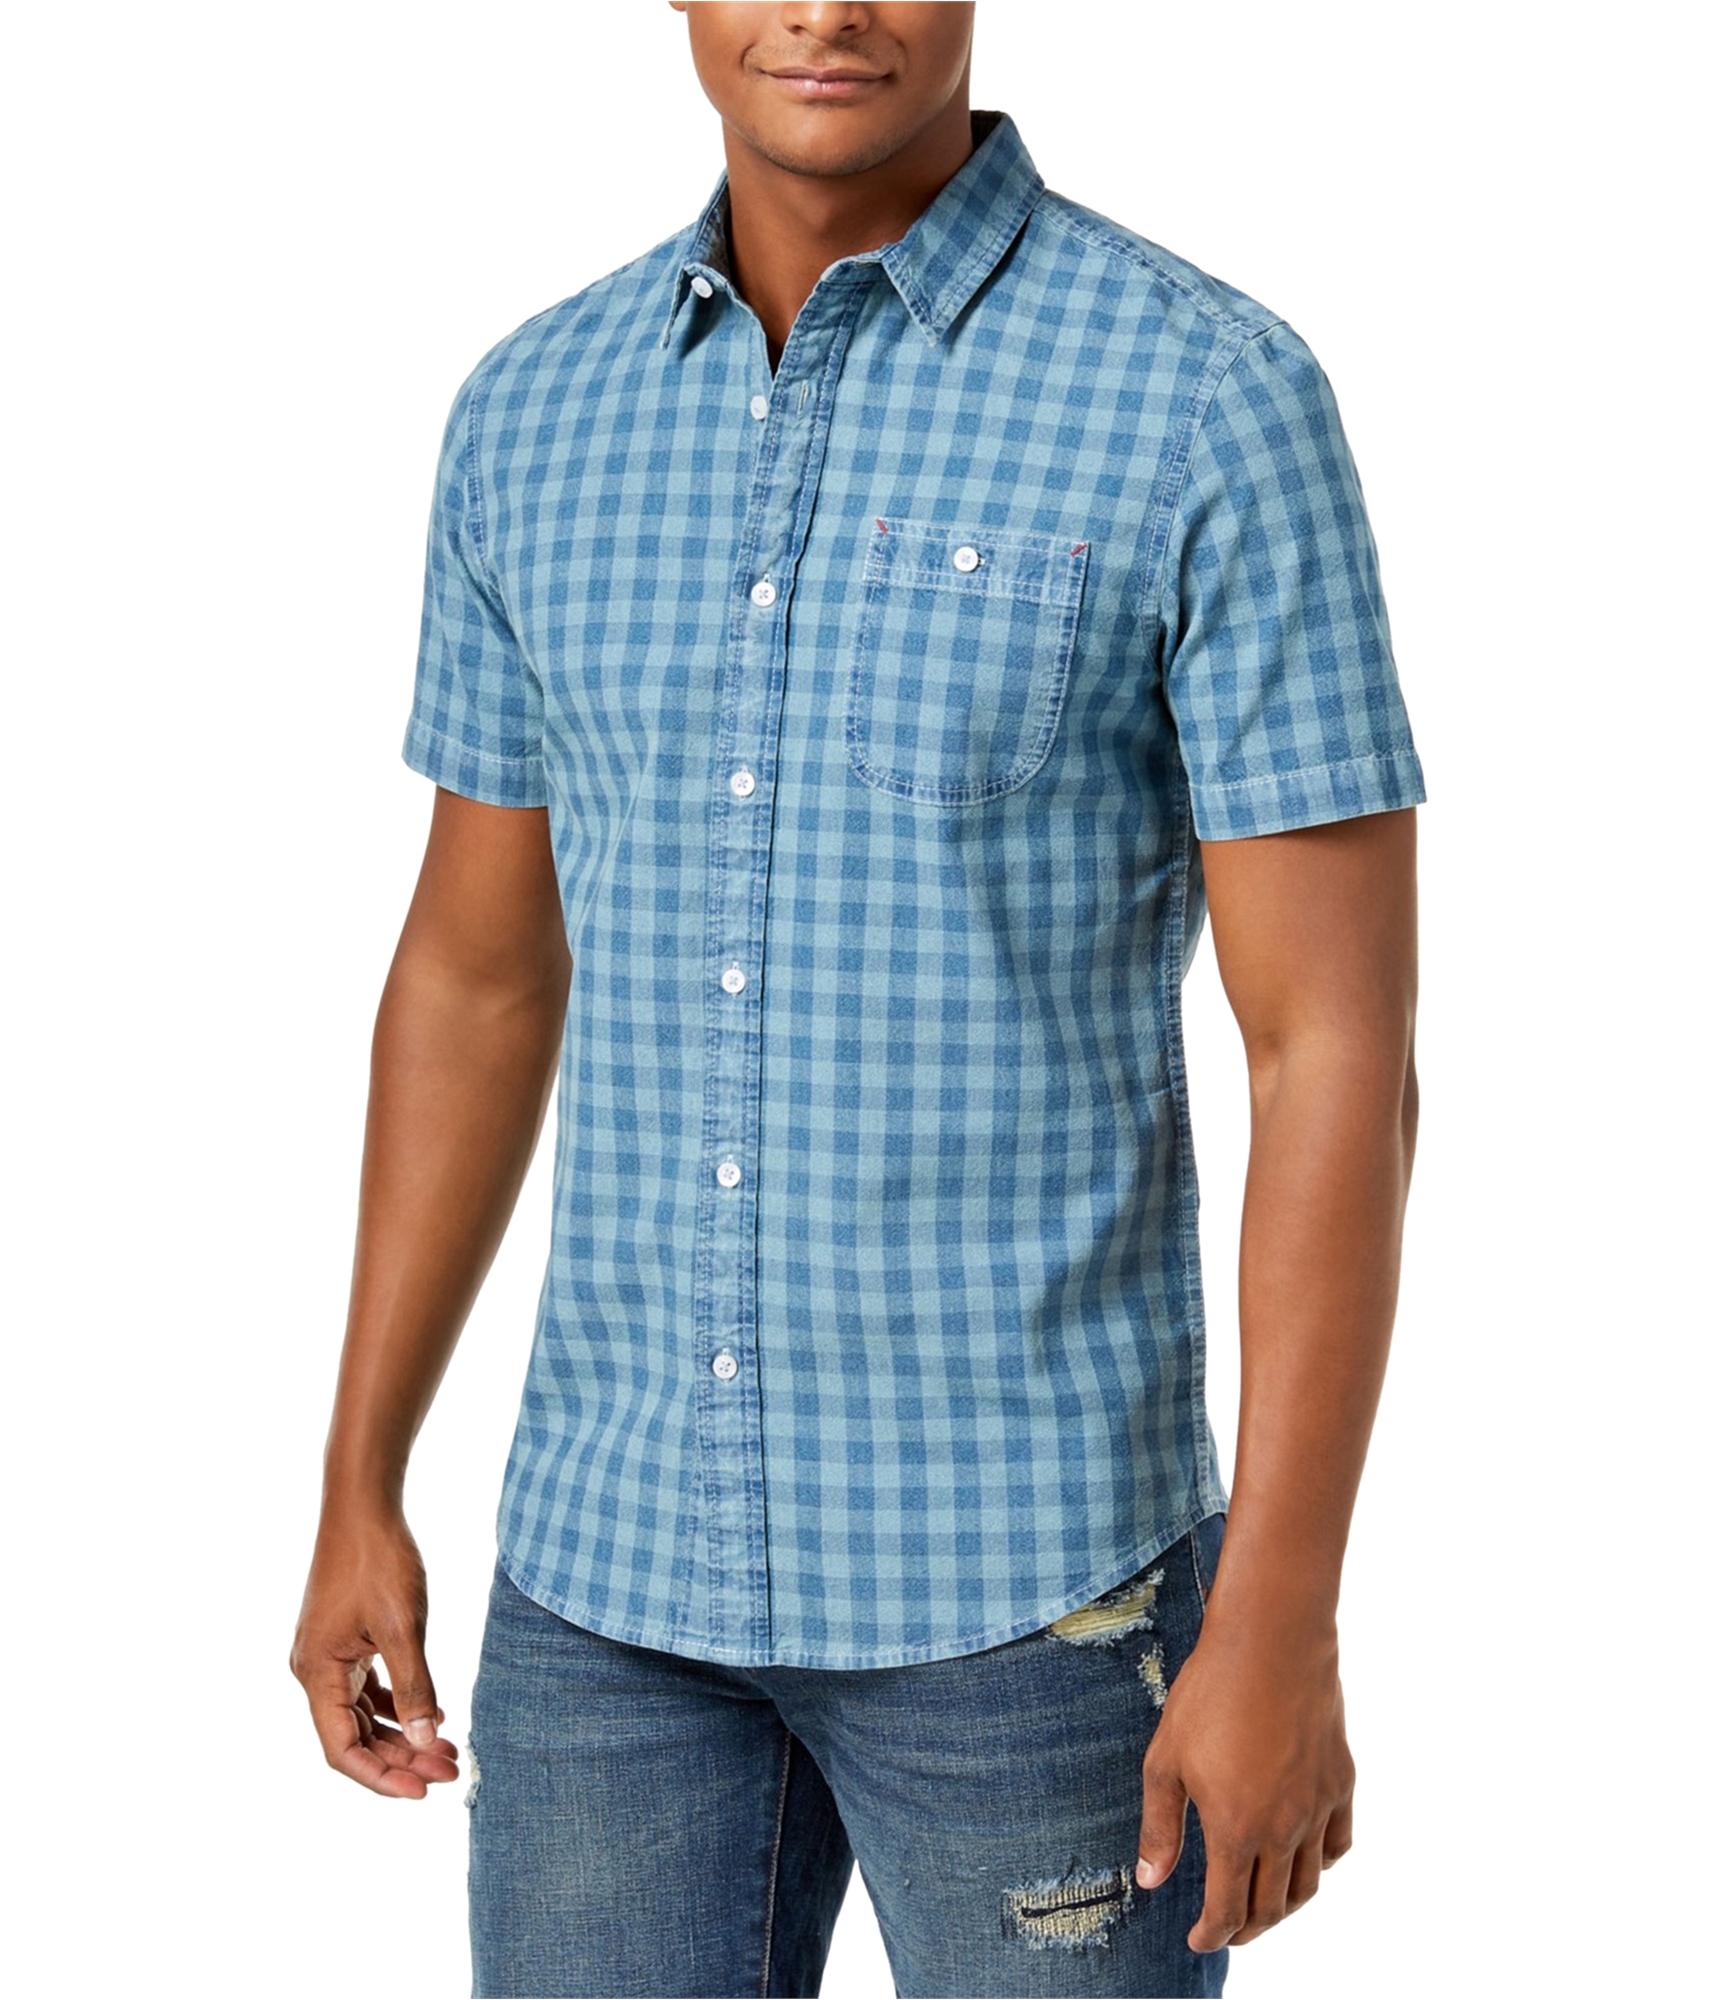 American Rag Mens Checkered Button Up Shirt, Blue, Small 732994032896 ...